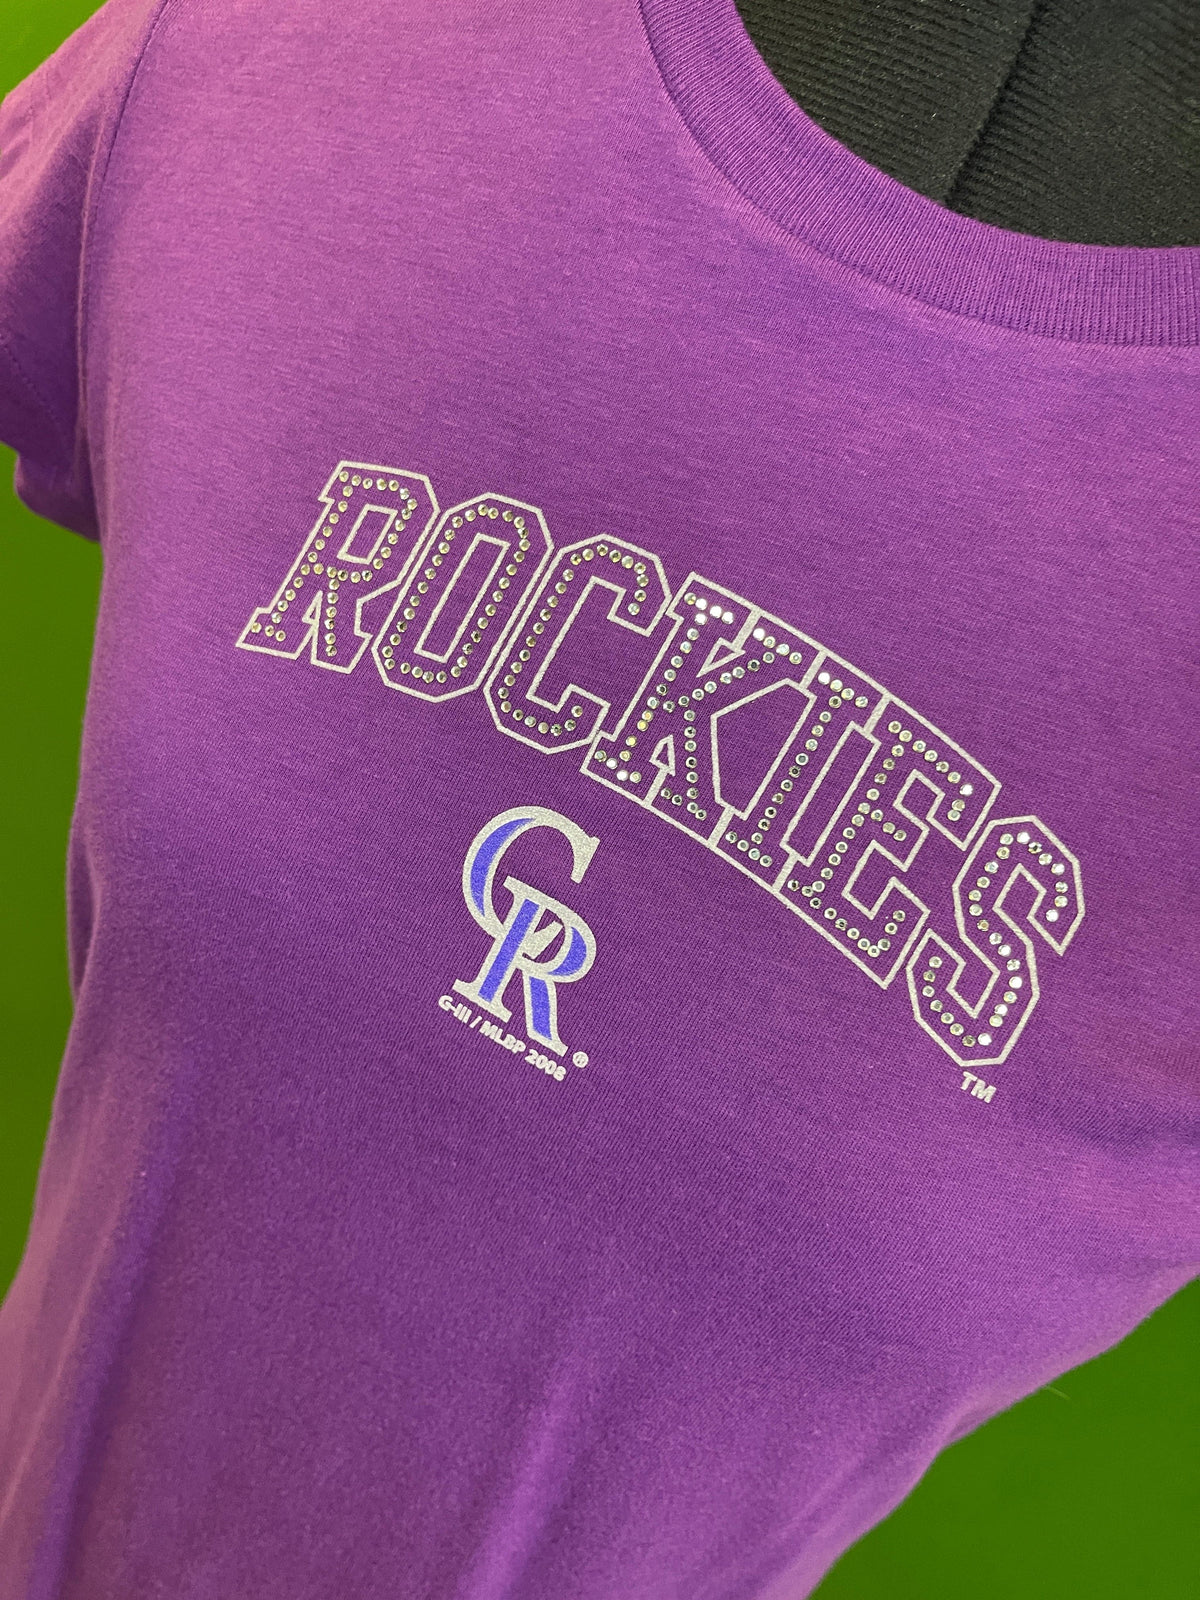 MLB Colorado Rockies GIII Sparkly Rhinestone Girls' T-Shirt Youth Large